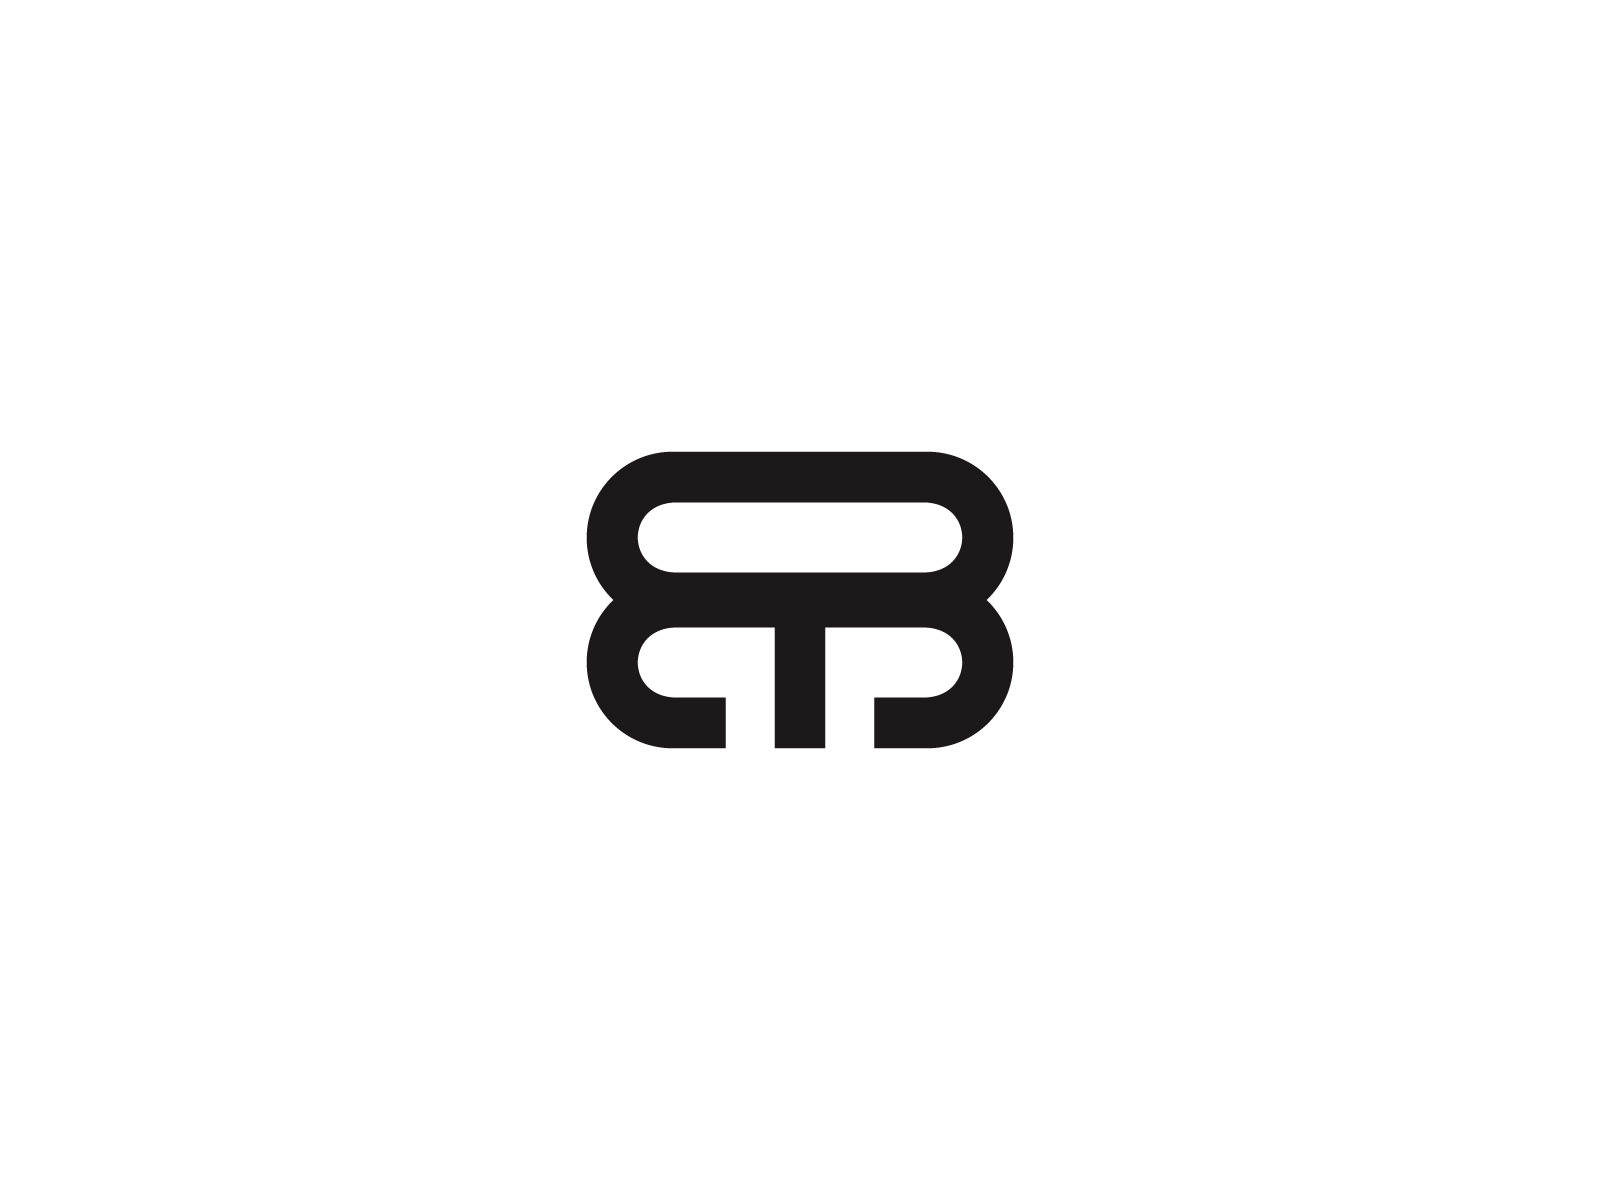 Eighty Logo by Tallant Design on Dribbble